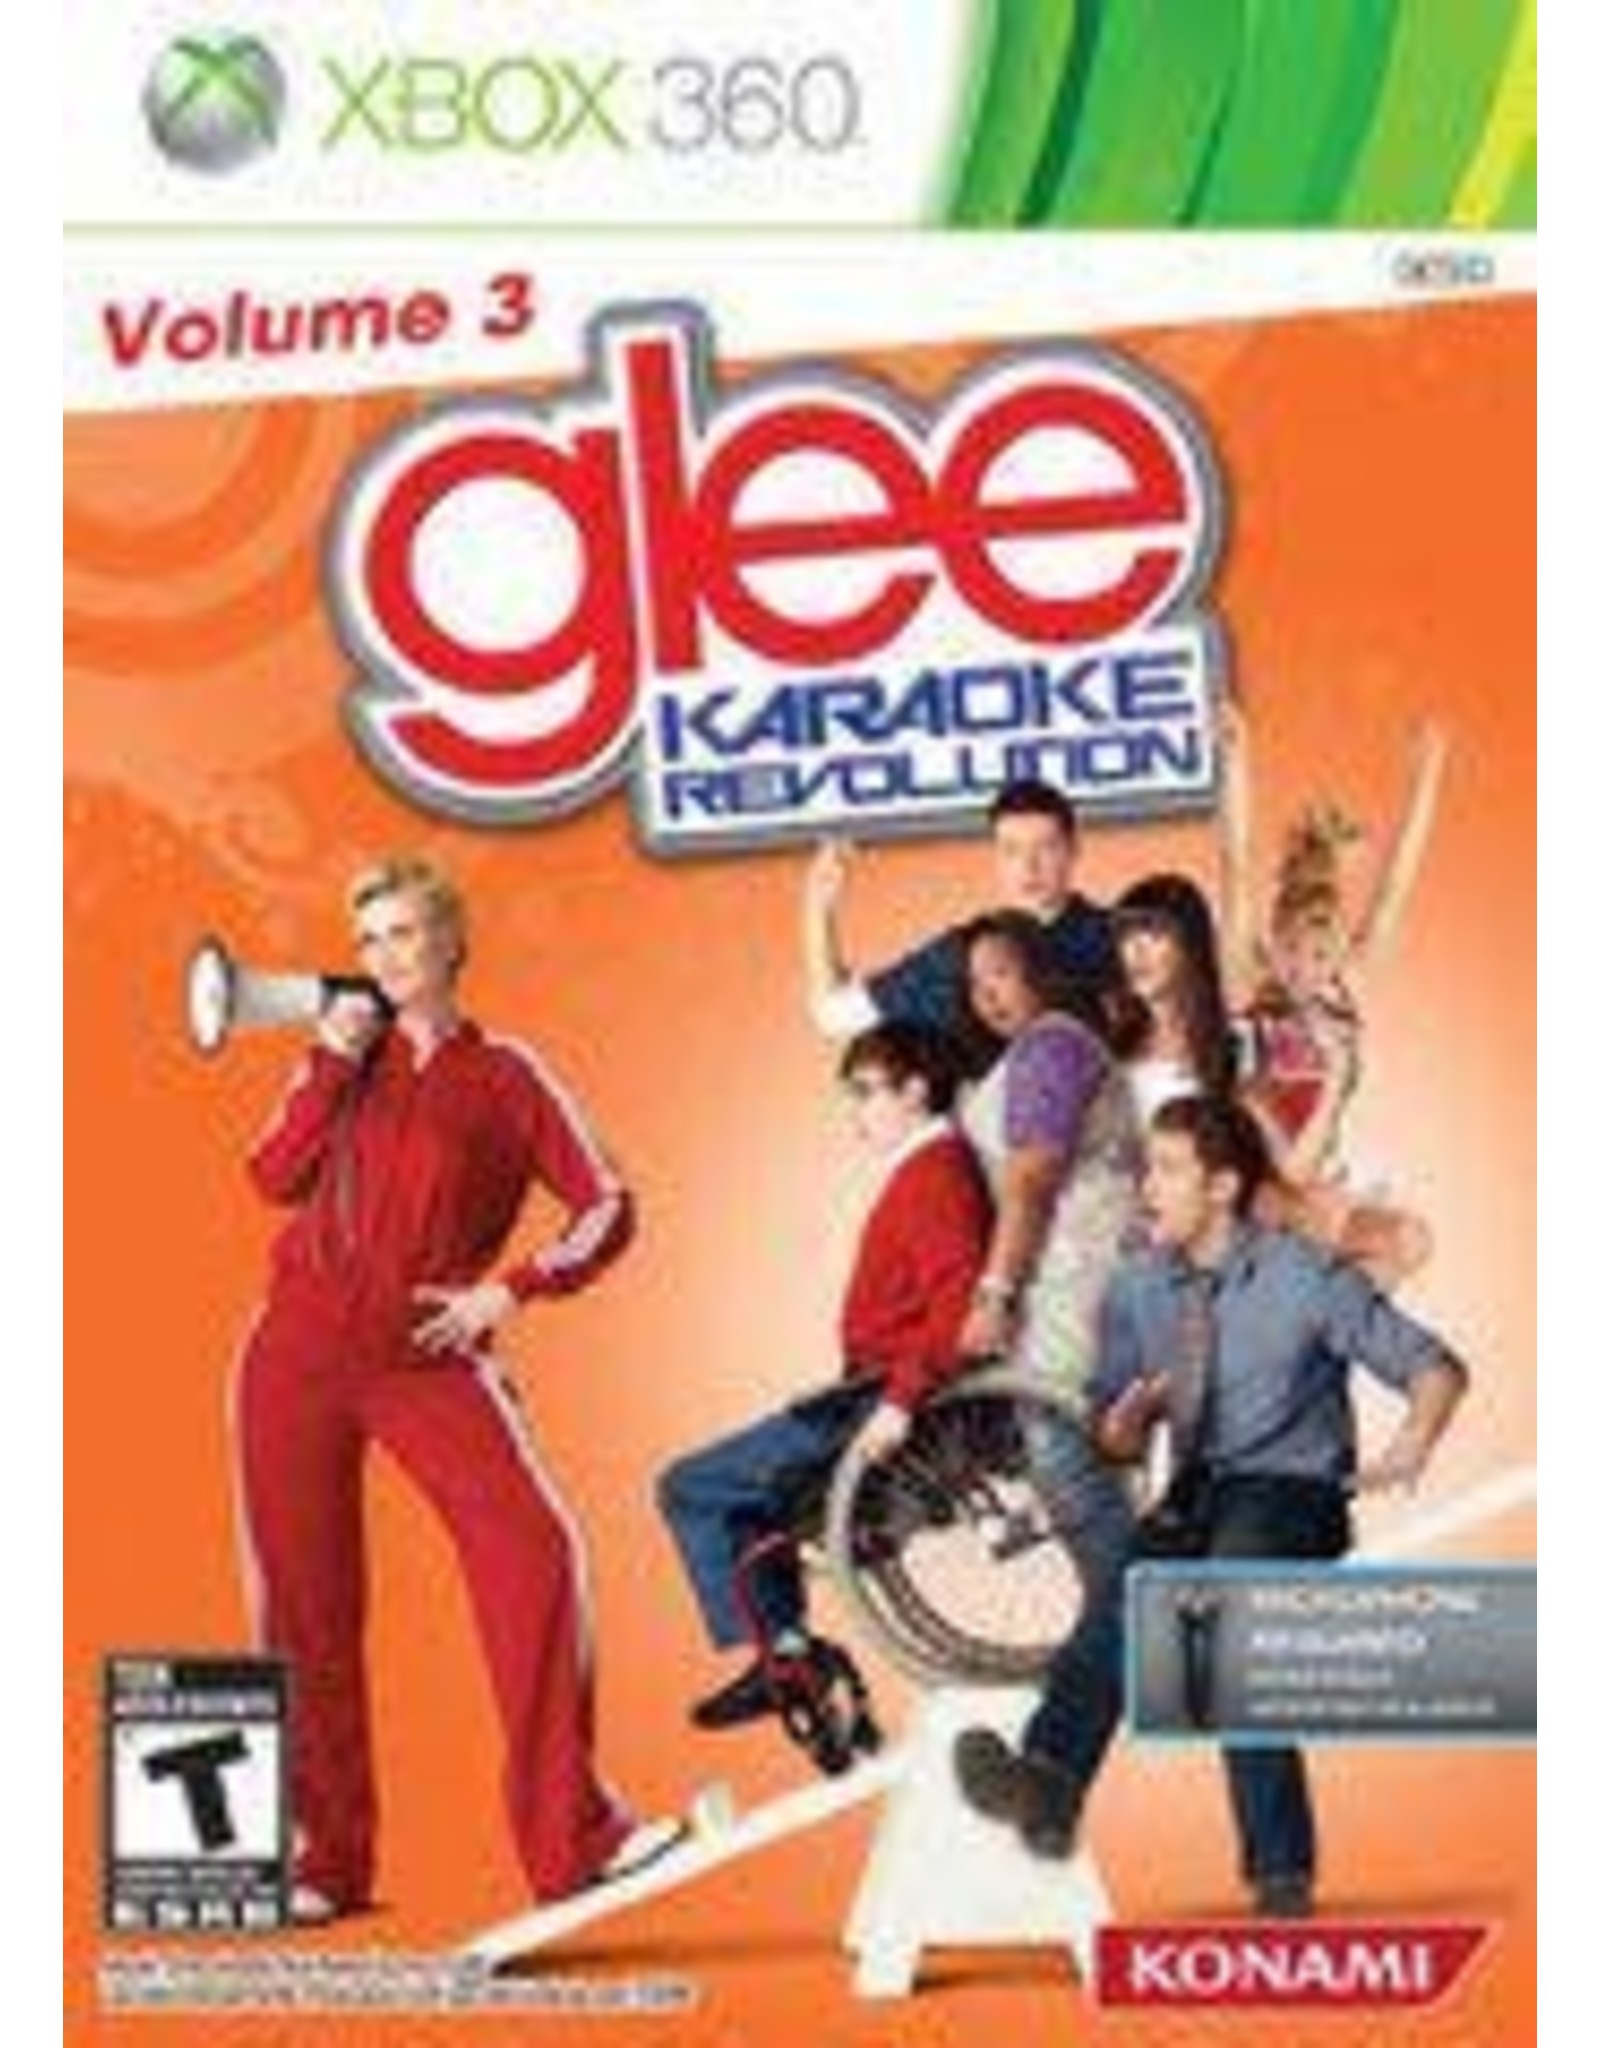 Xbox 360 Karaoke Revolution Glee Vol 3 (Game Only, CiB)